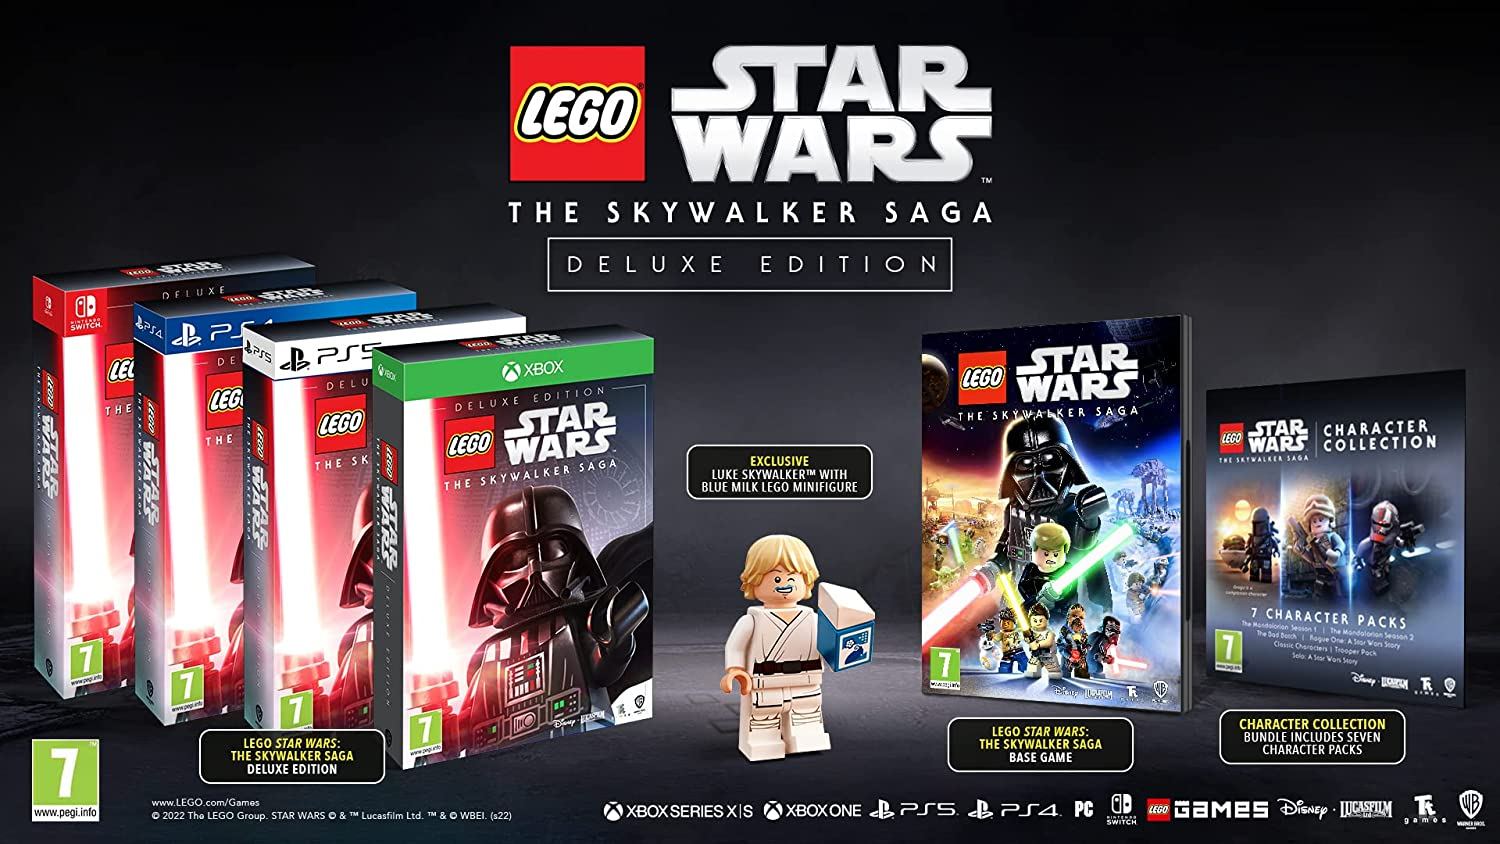 LEGO® Star Wars™: The Skywalker Saga Character Collection 1 & 2 no